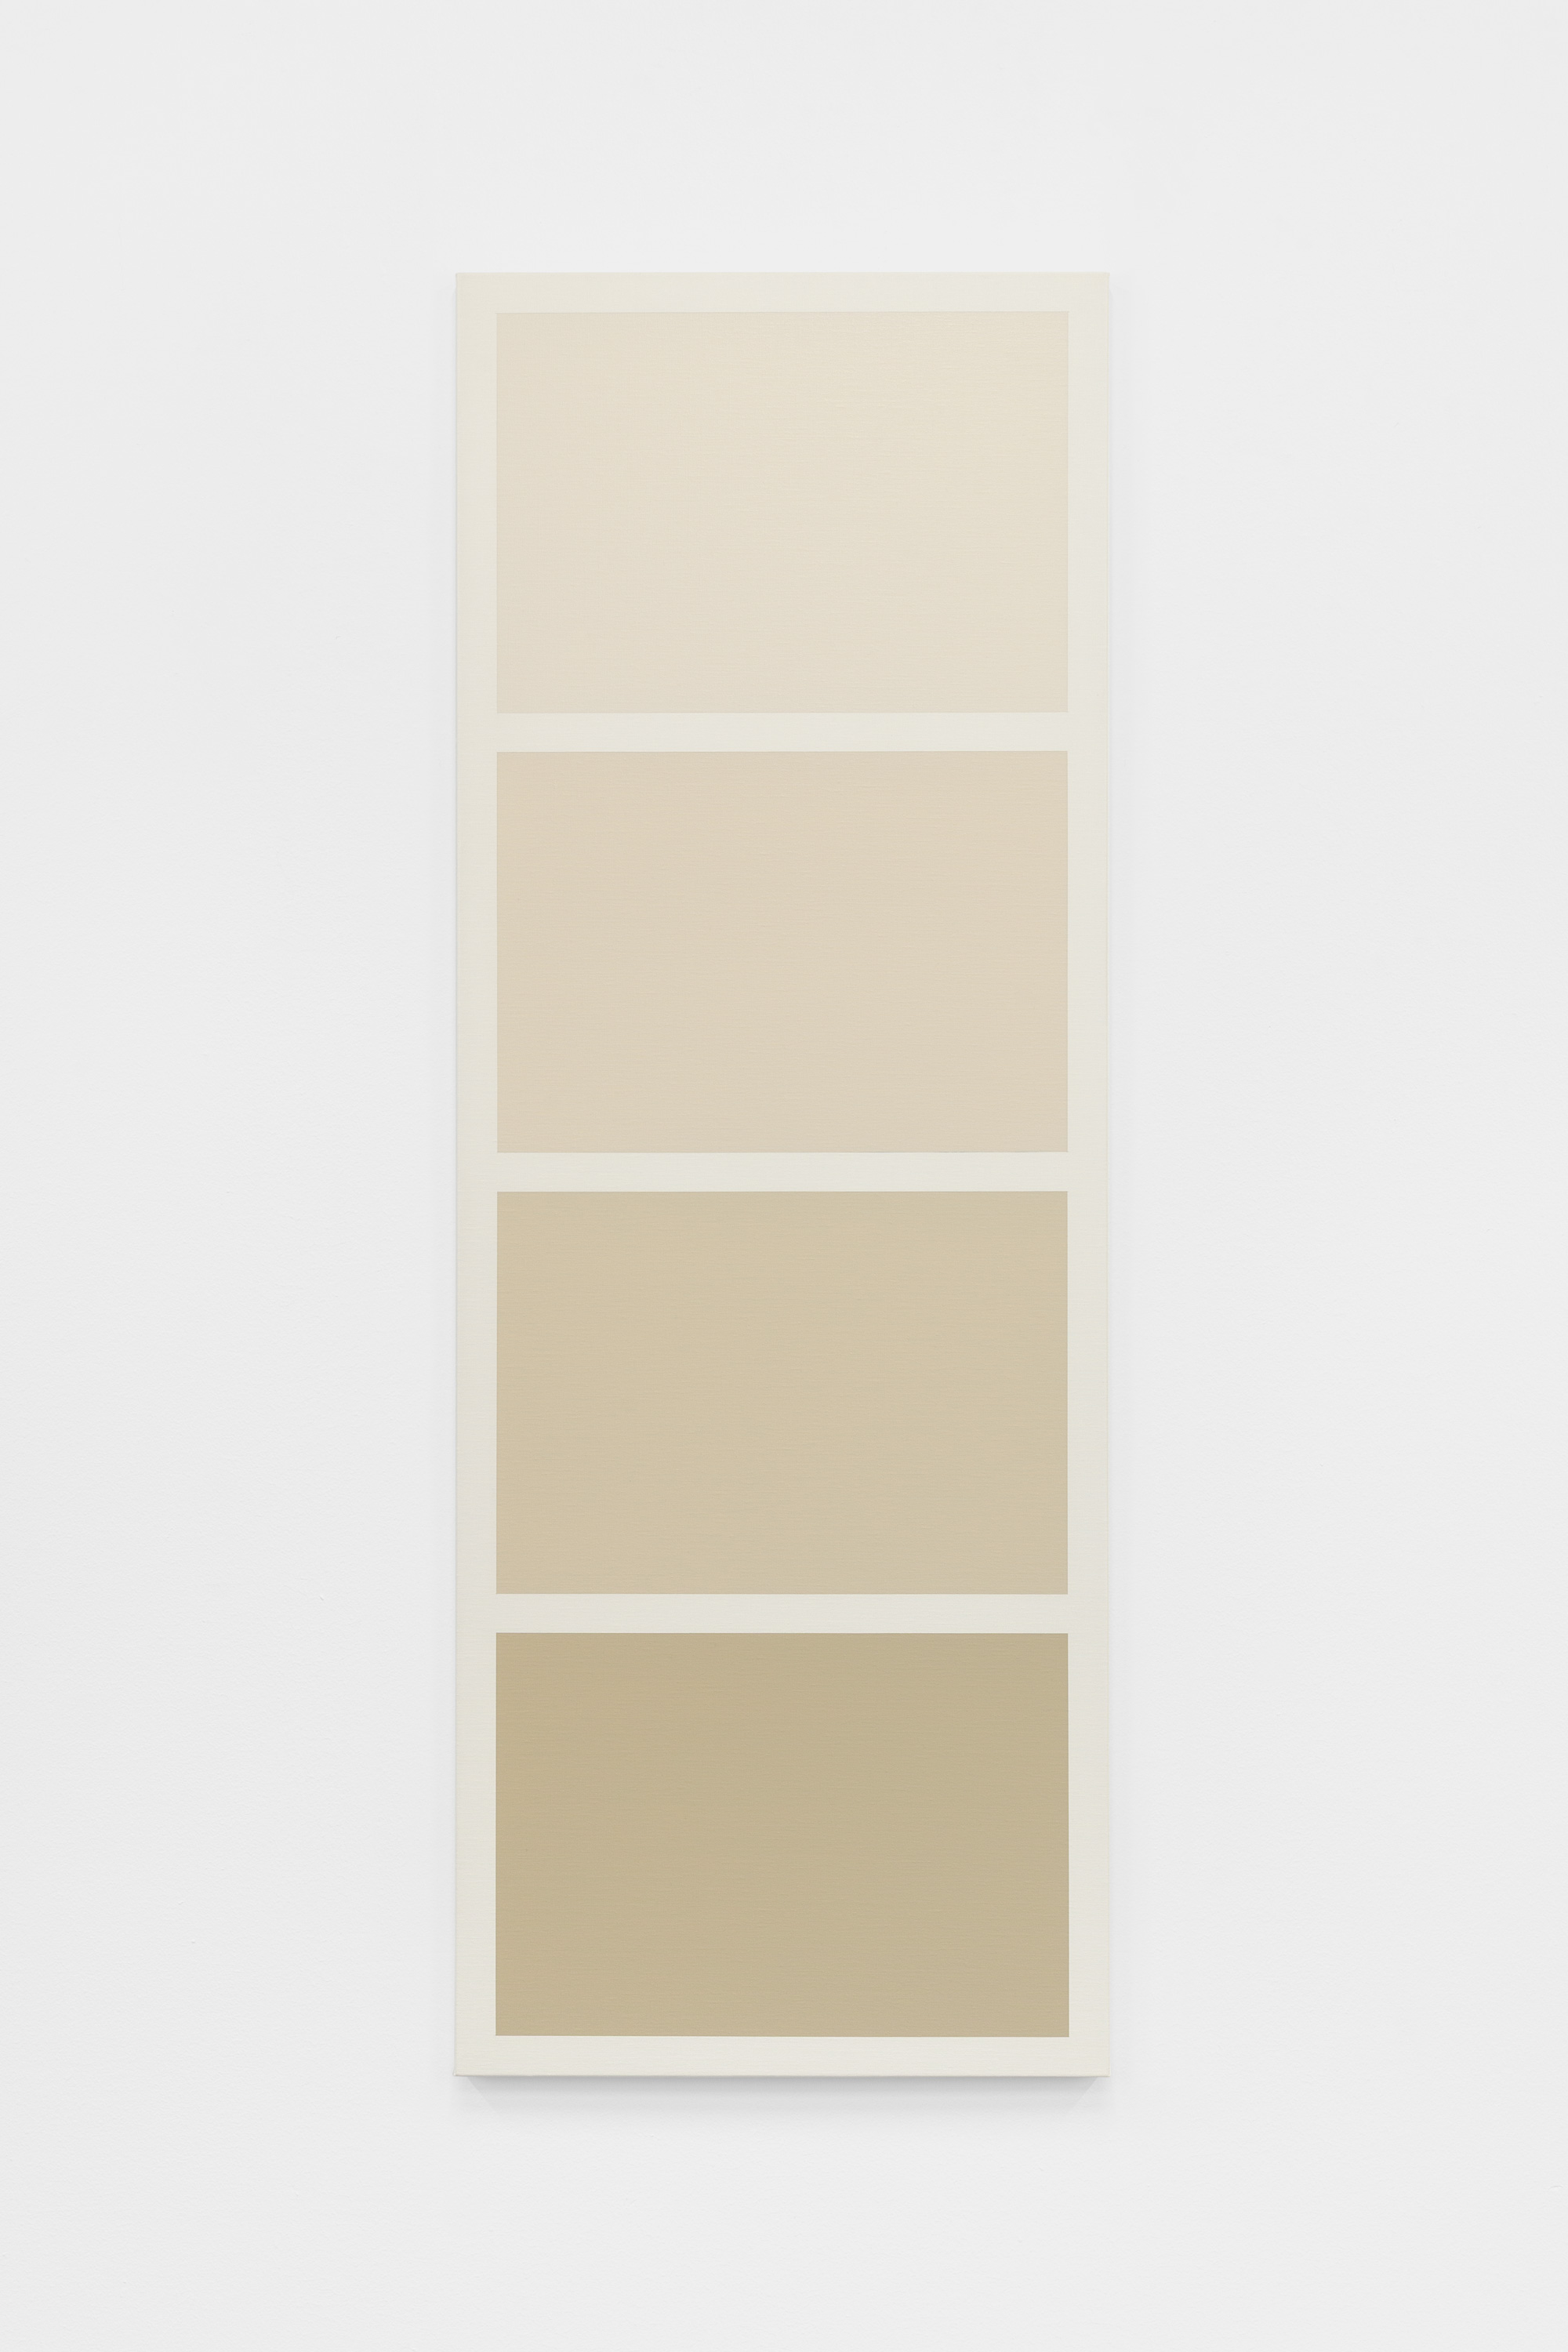 Blanc glauque, 2020, olja på duk, 54 x 150 cm